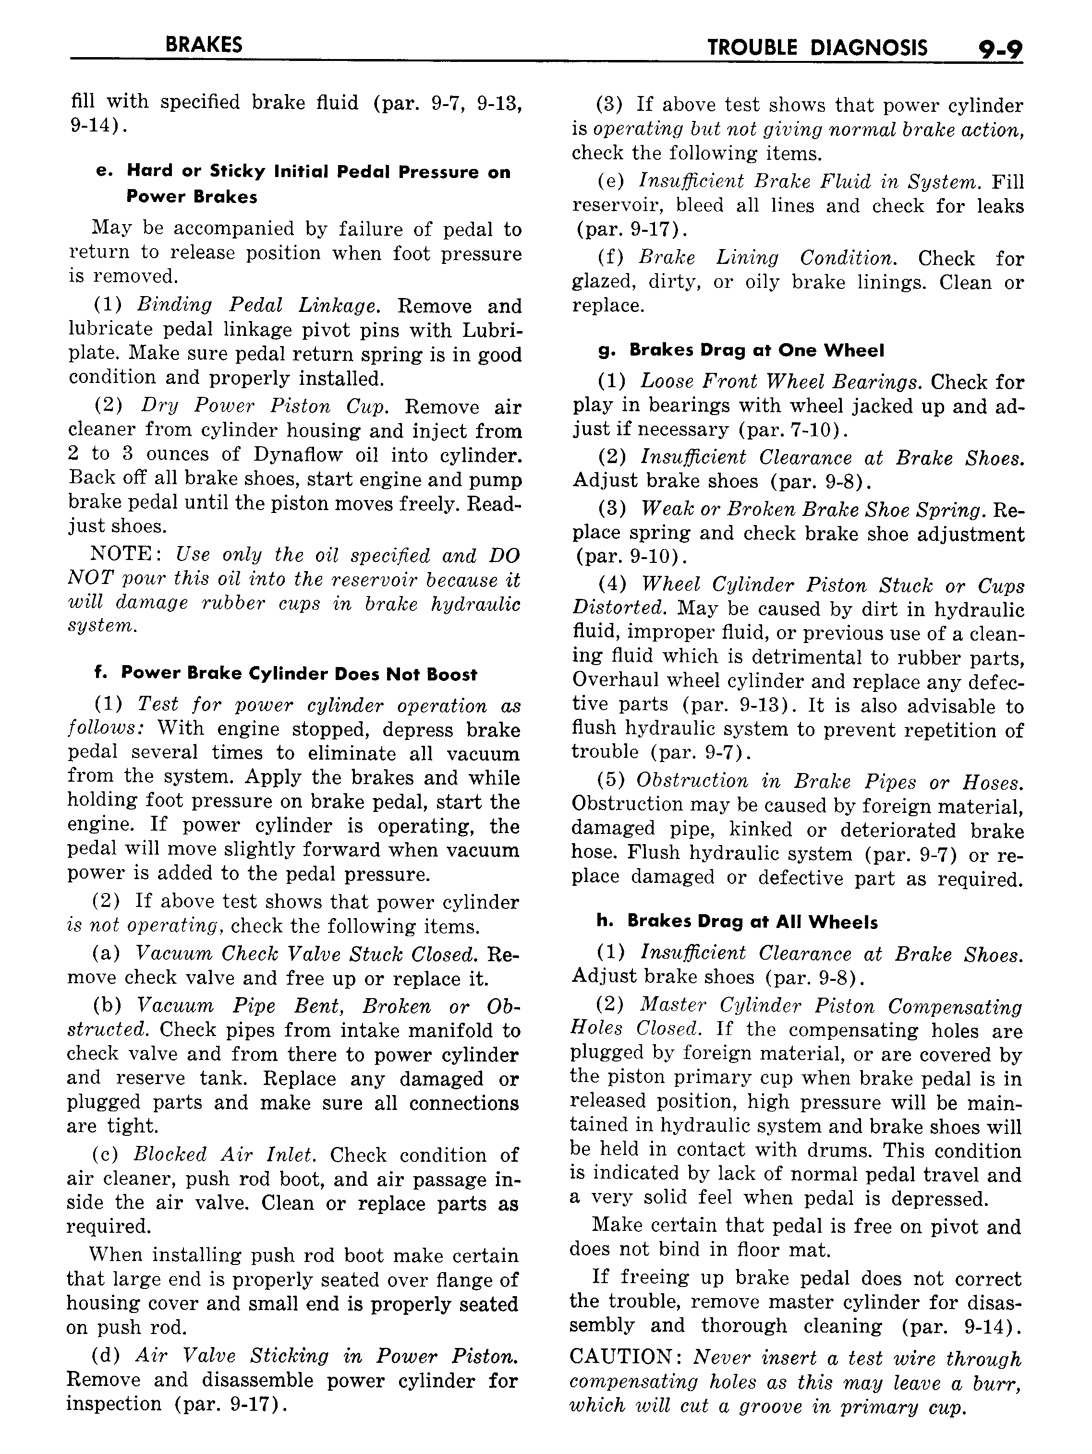 n_10 1957 Buick Shop Manual - Brakes-009-009.jpg